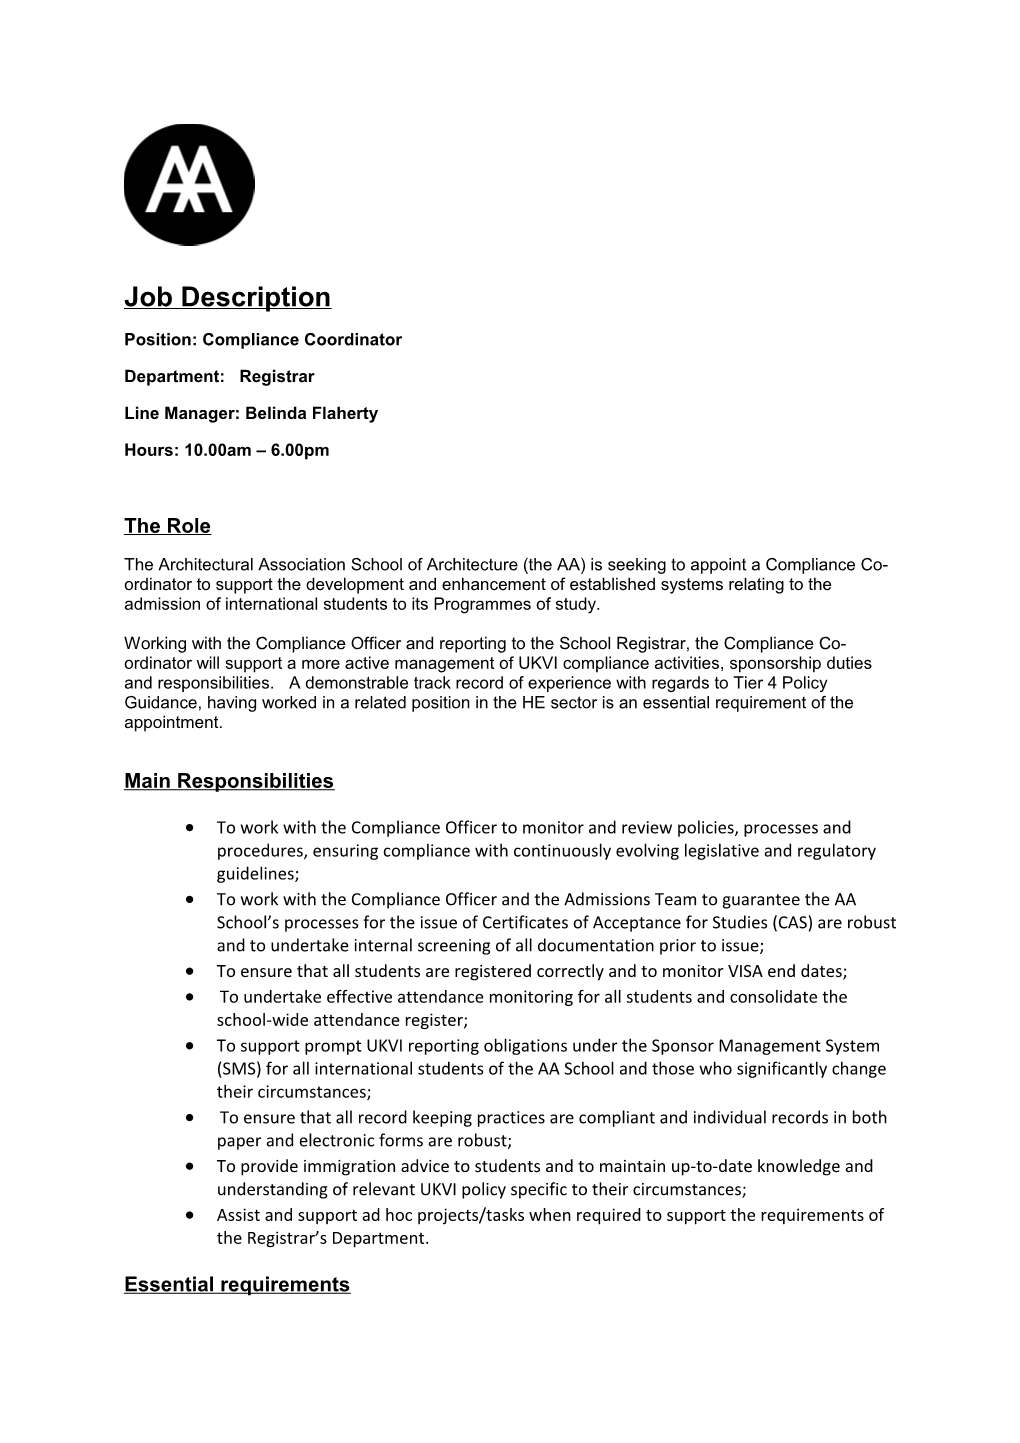 Position: Compliance Coordinator